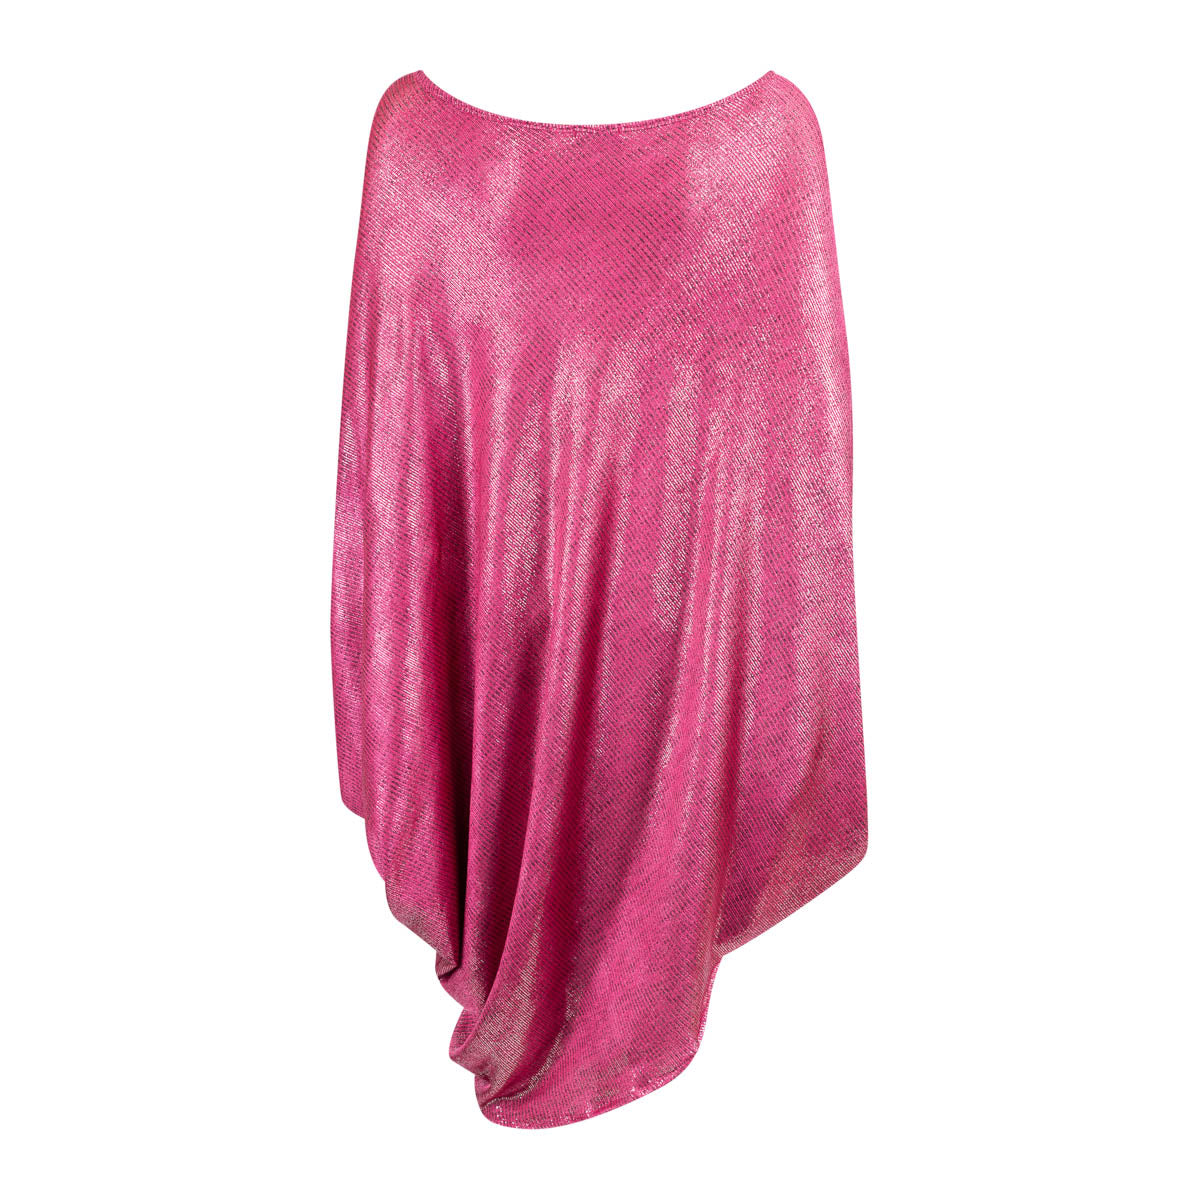 Pink Asymmetrical Squared Dress